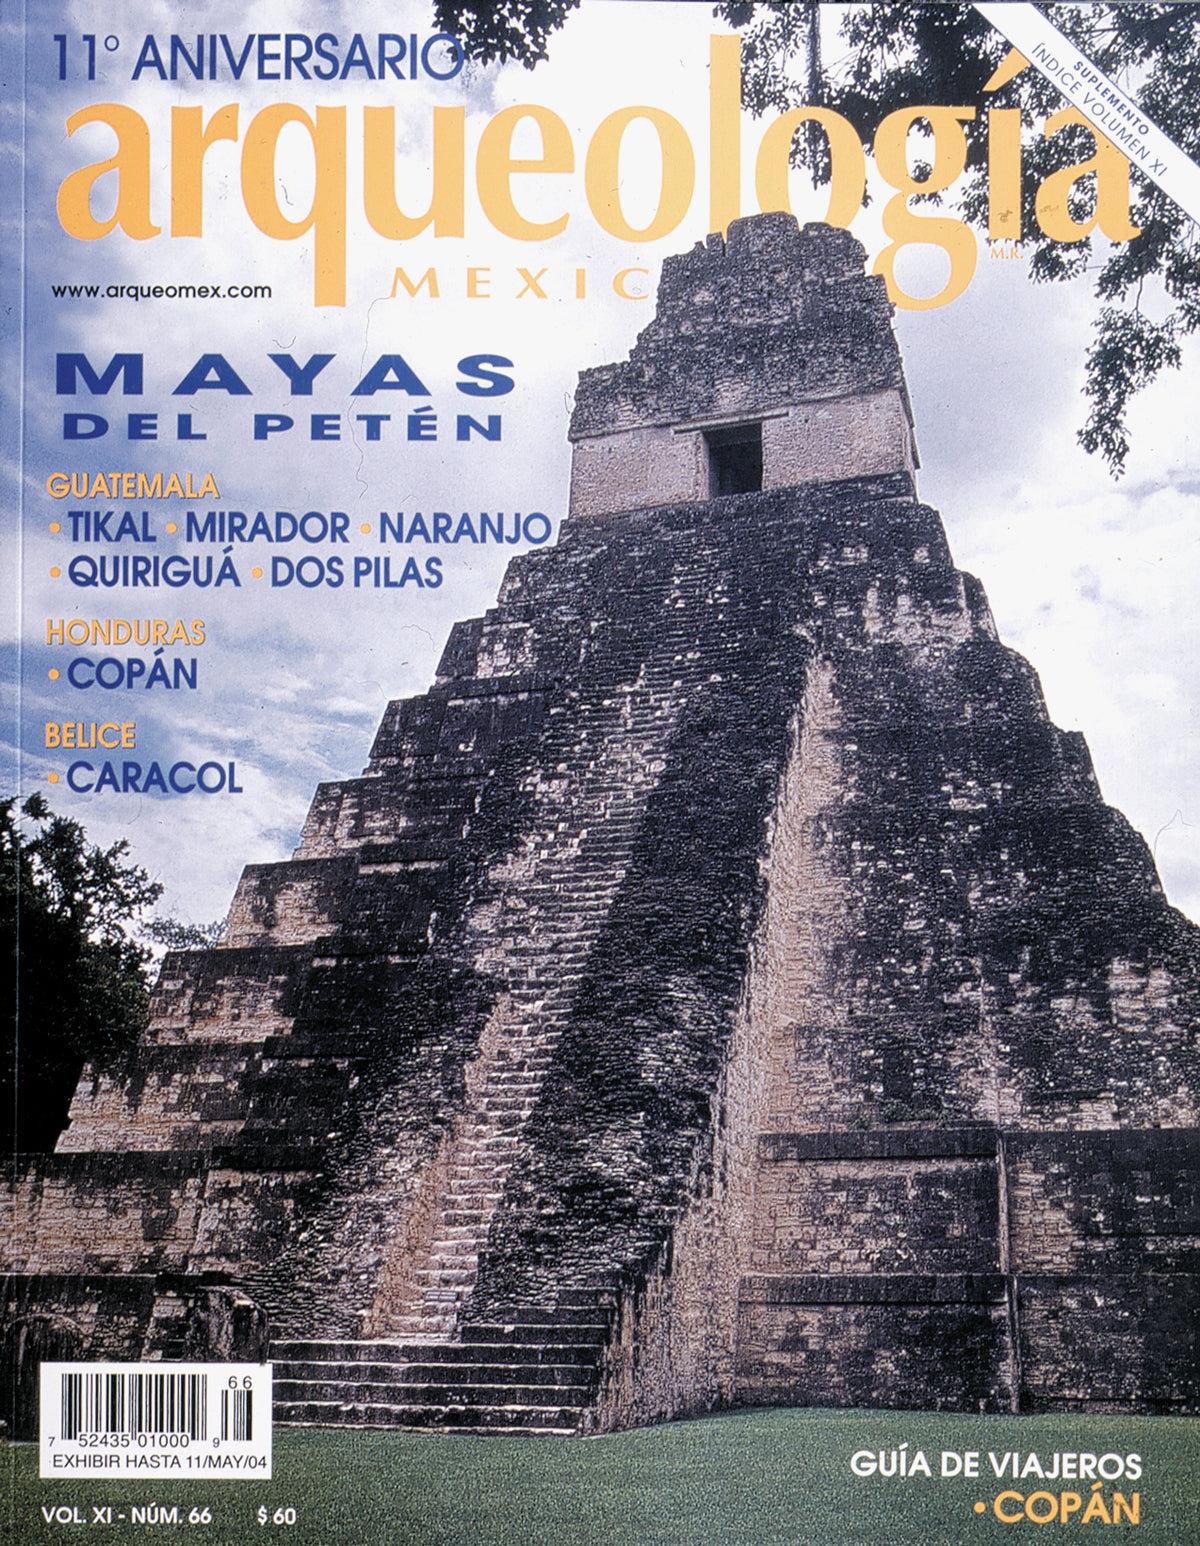 Mayas del Petén